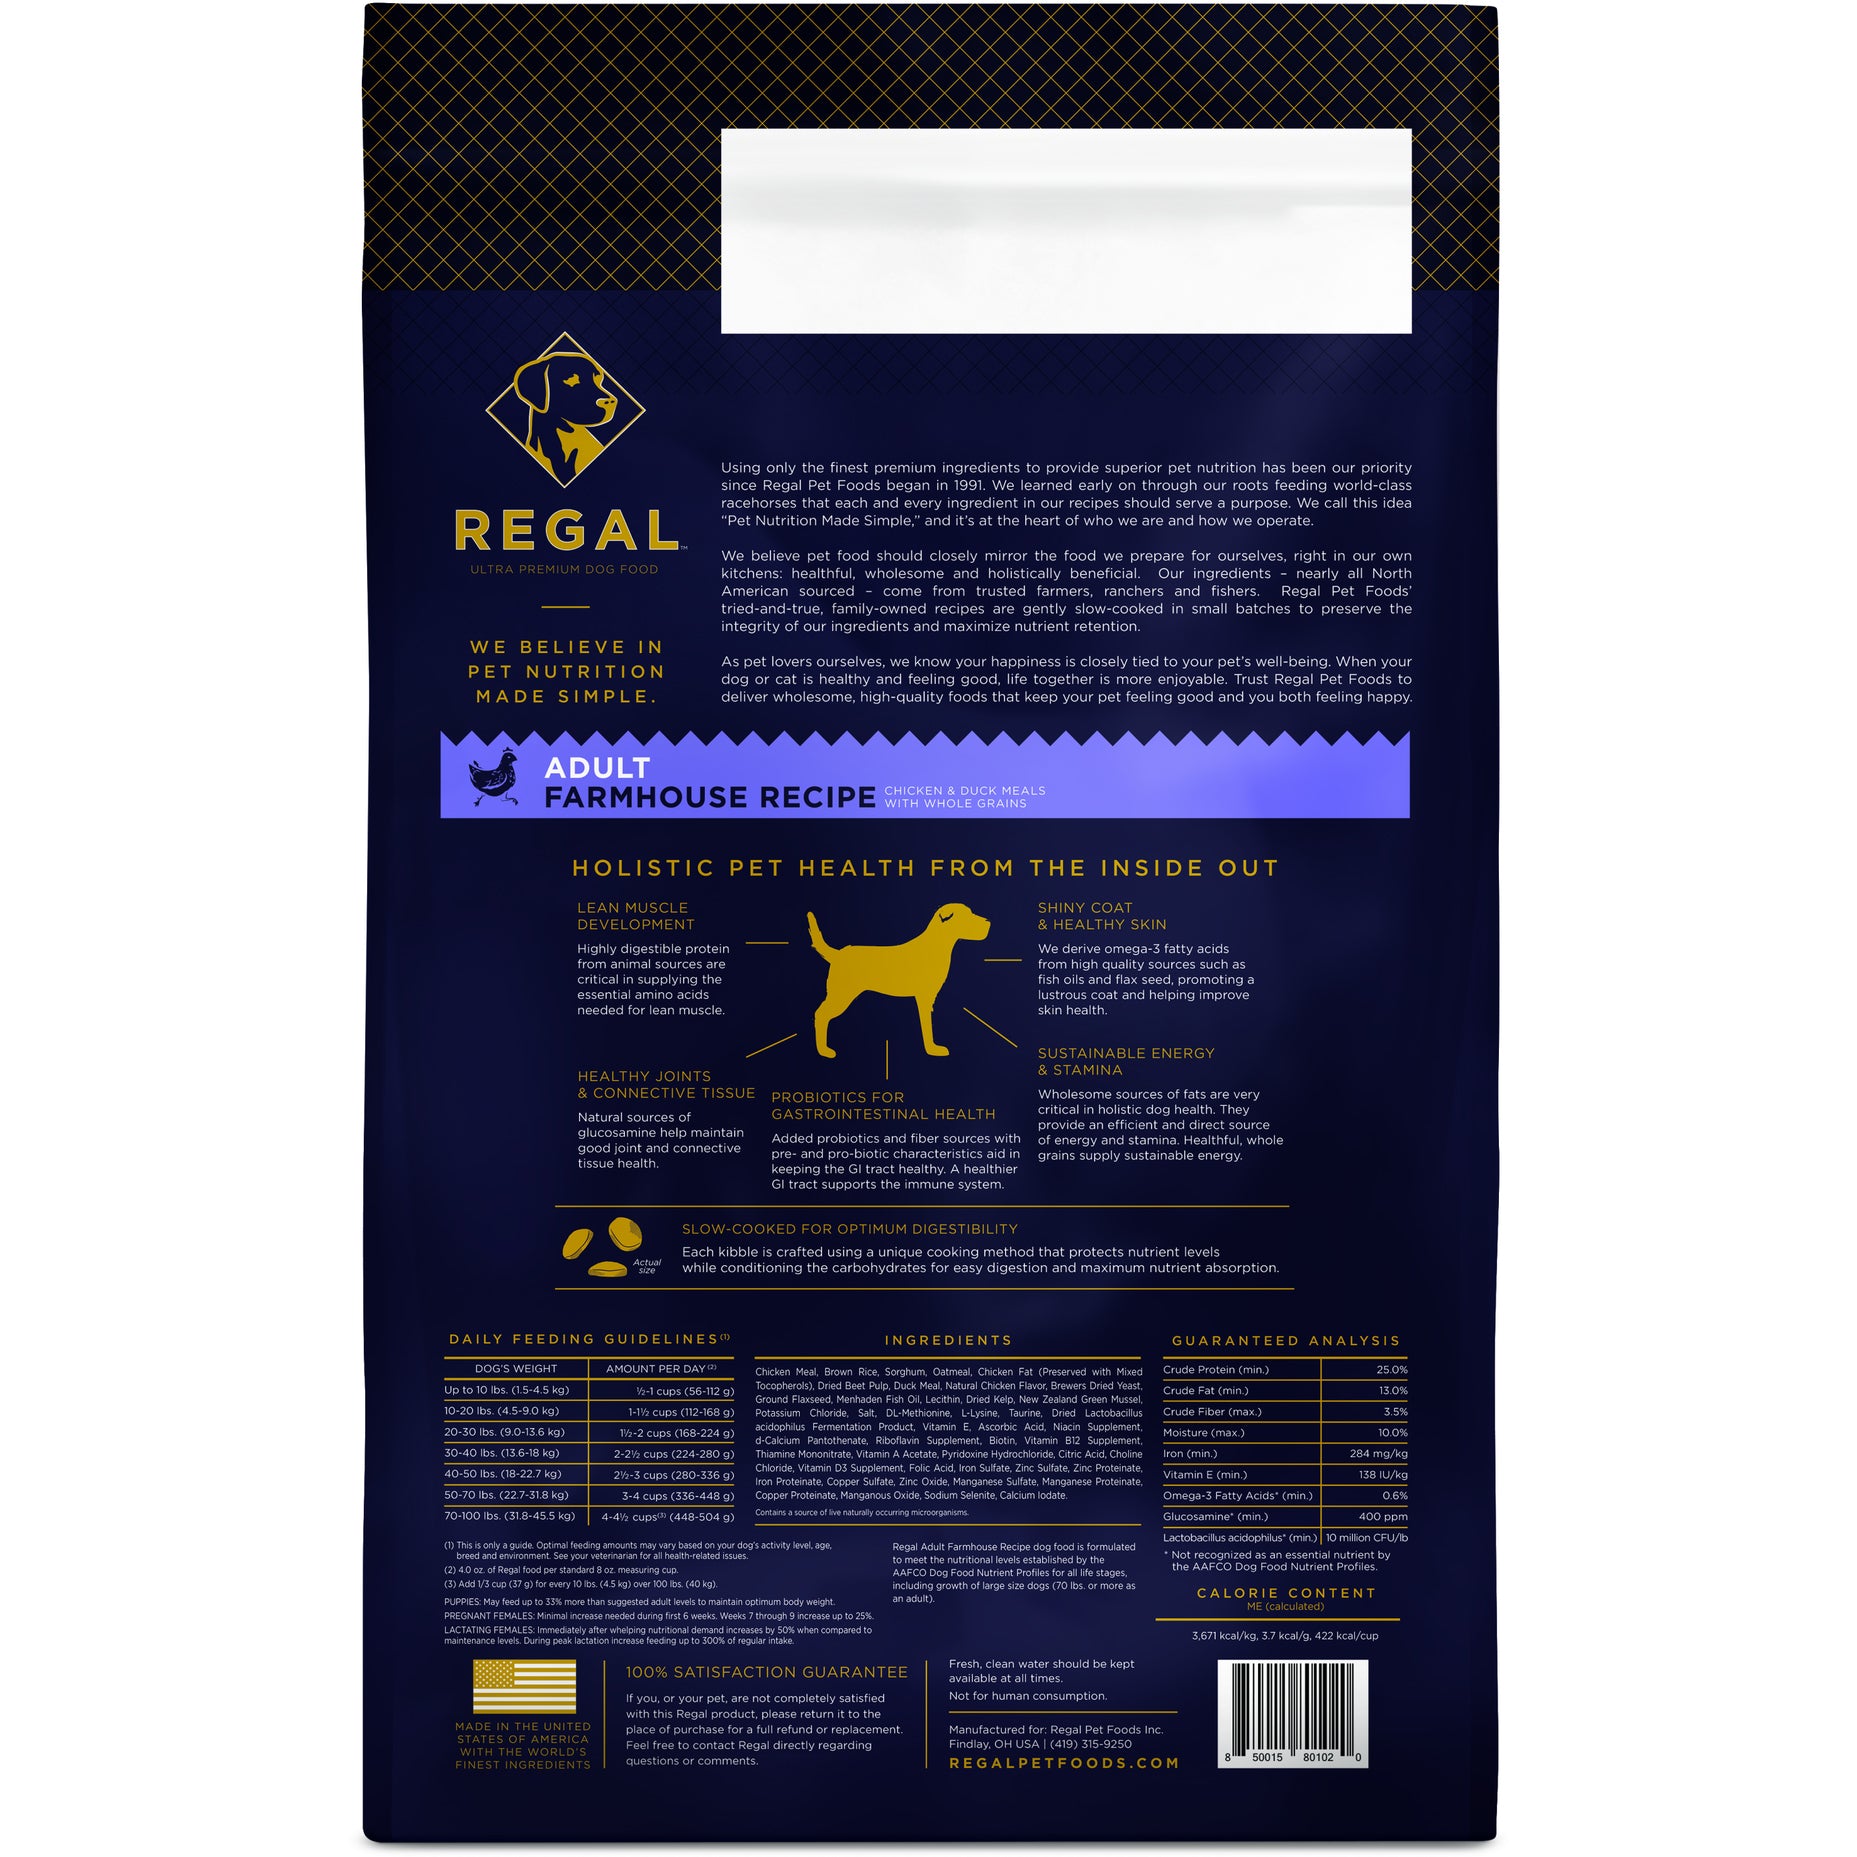 Regal Adult Farmhouse Recipe Dry Dog Food